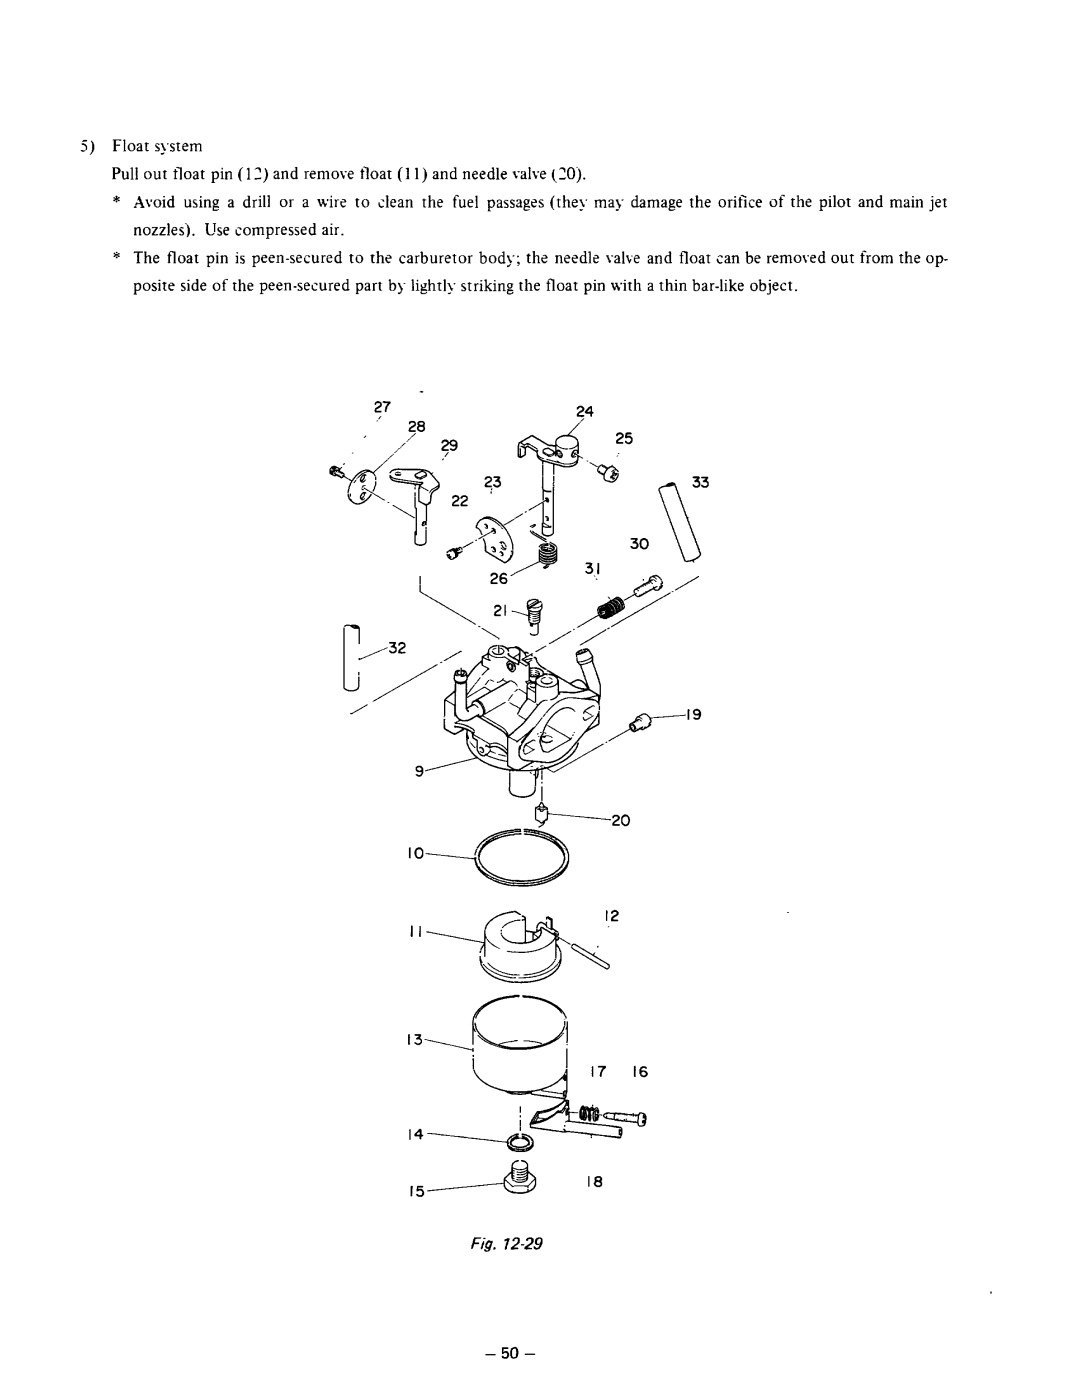 Subaru Robin Power Products R600 manual 5Float system 